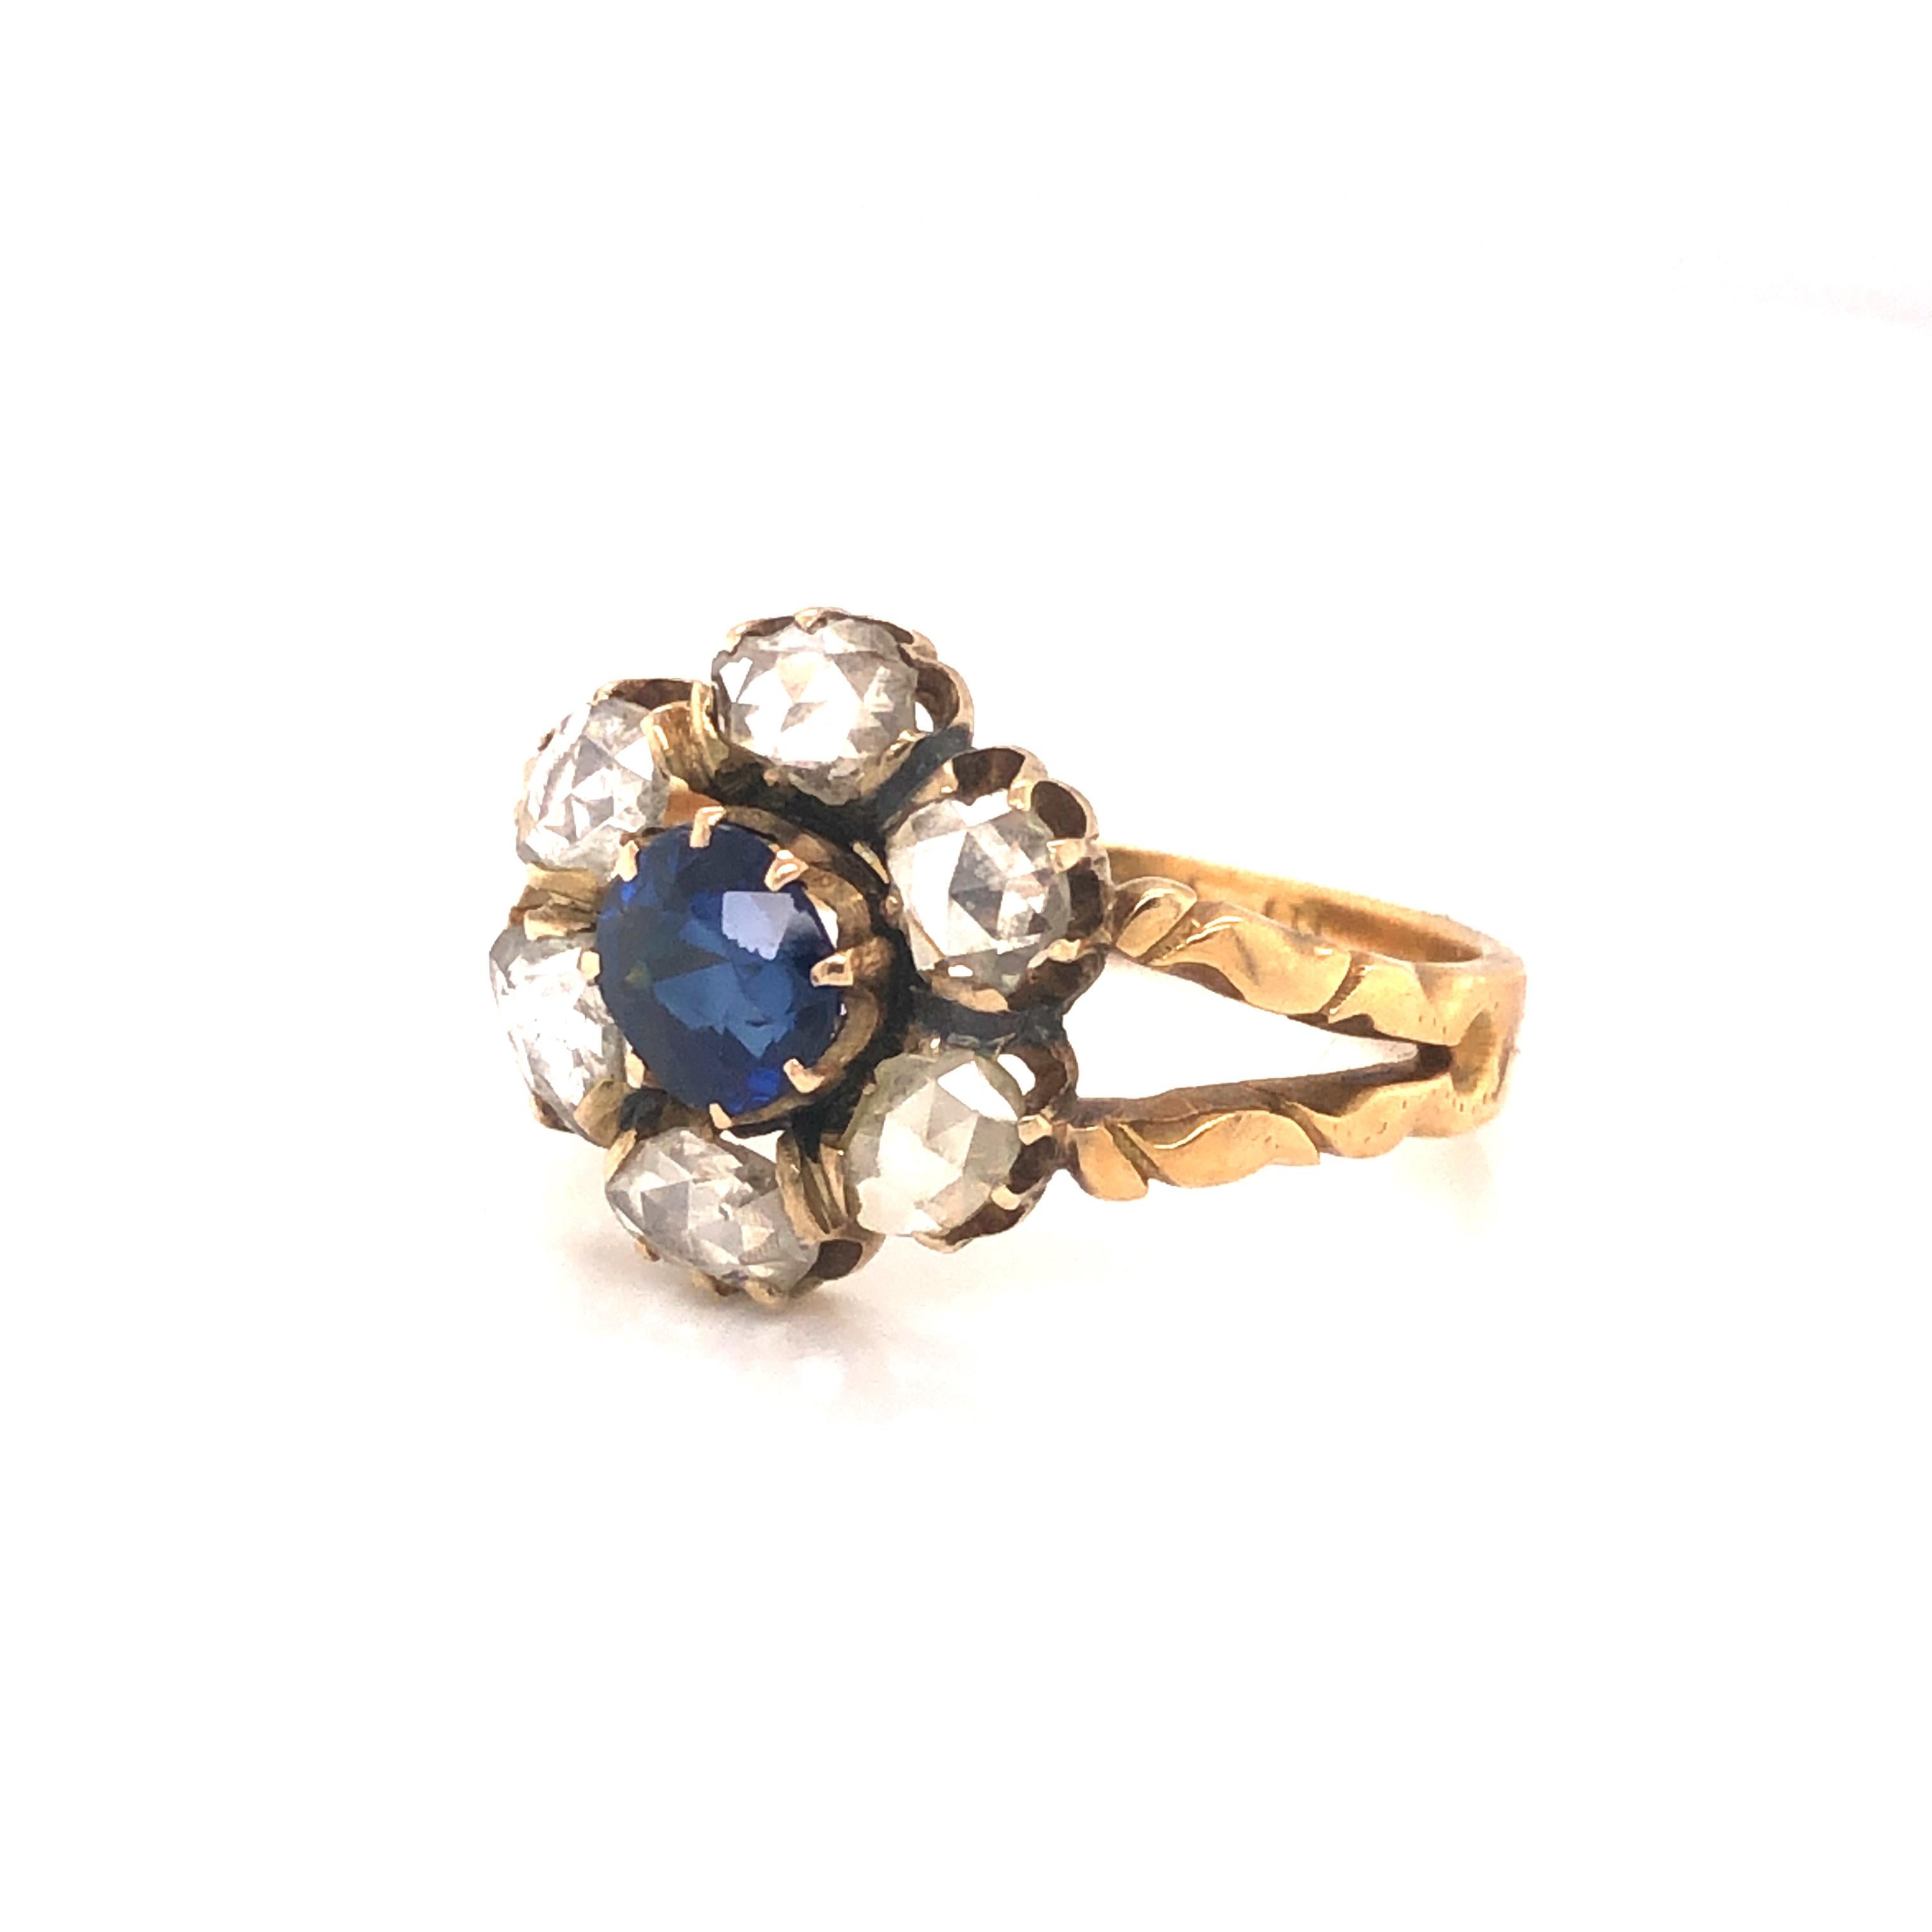 Old Mine Cut Art Nouveau Sapphire and Diamond Ring